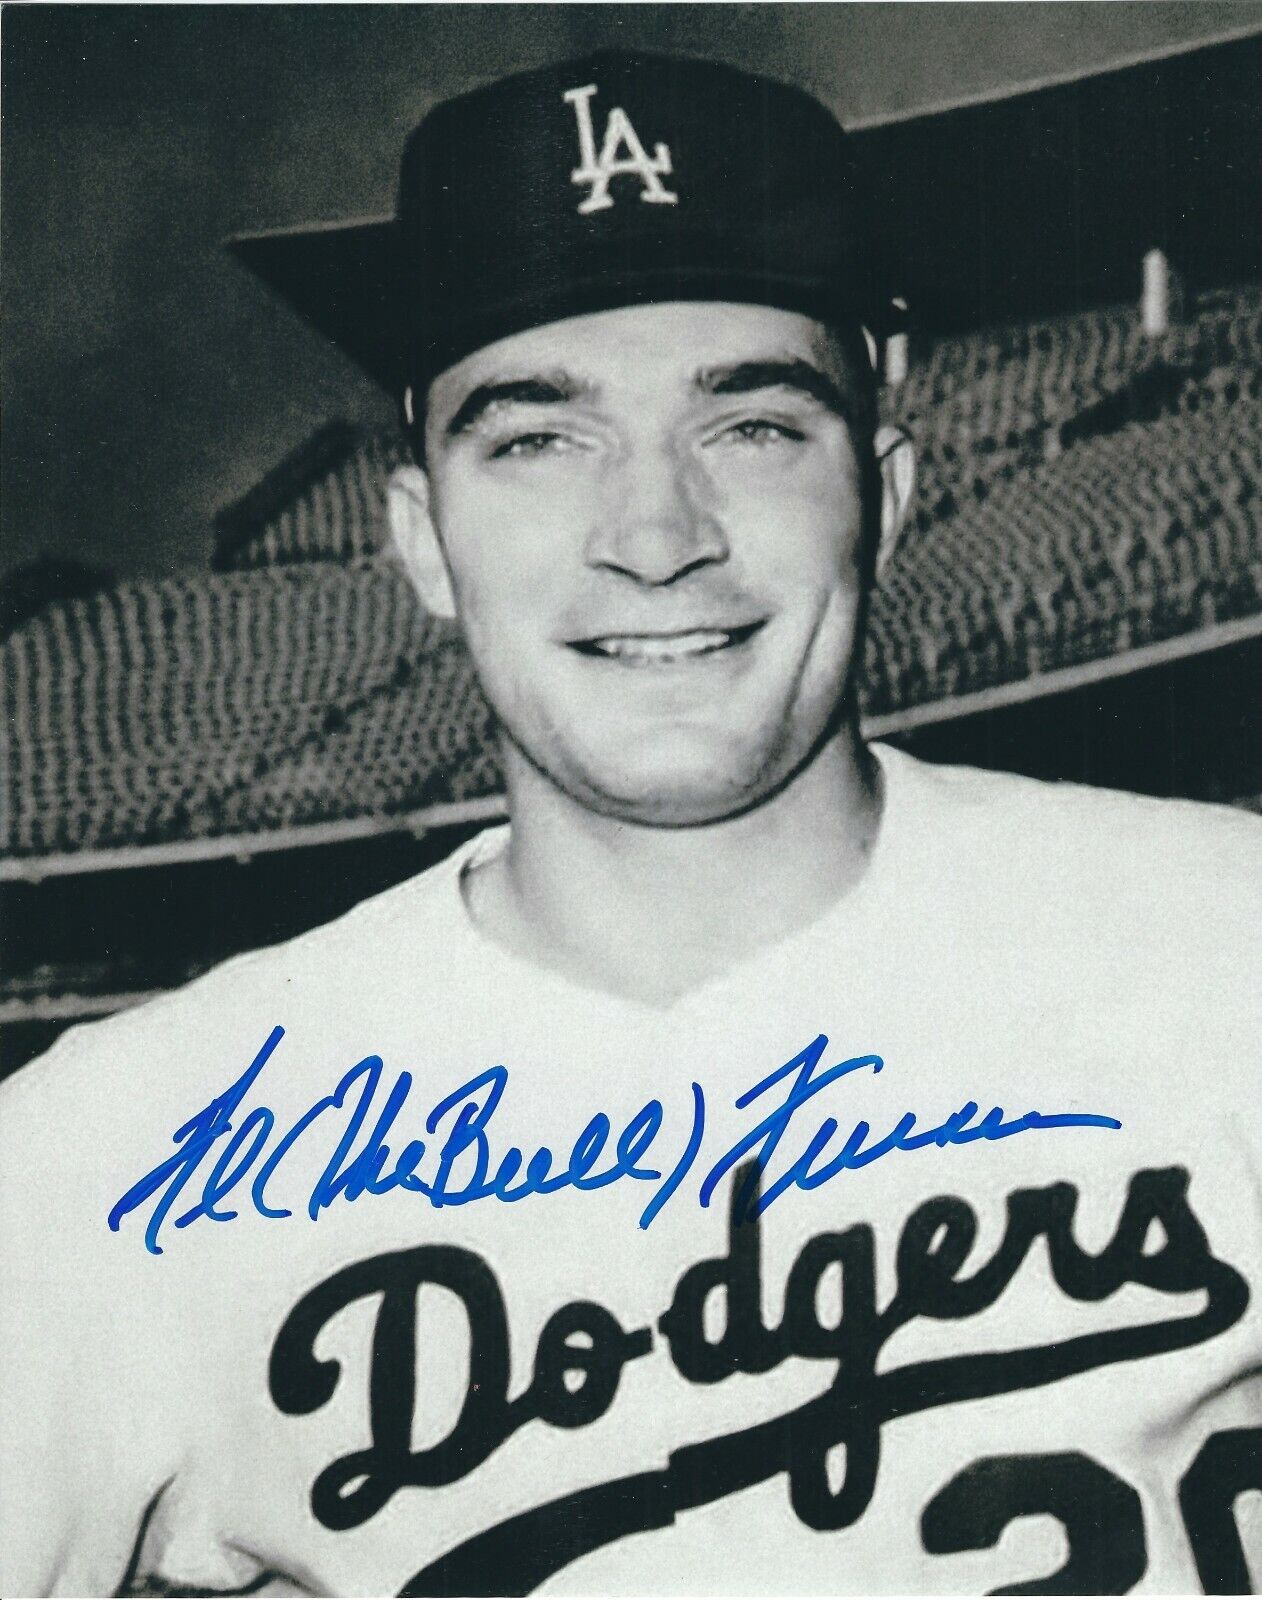 Signed 8x10 AL FERRARA Los Angeles Dodgers Autographed Photo Poster painting - COA